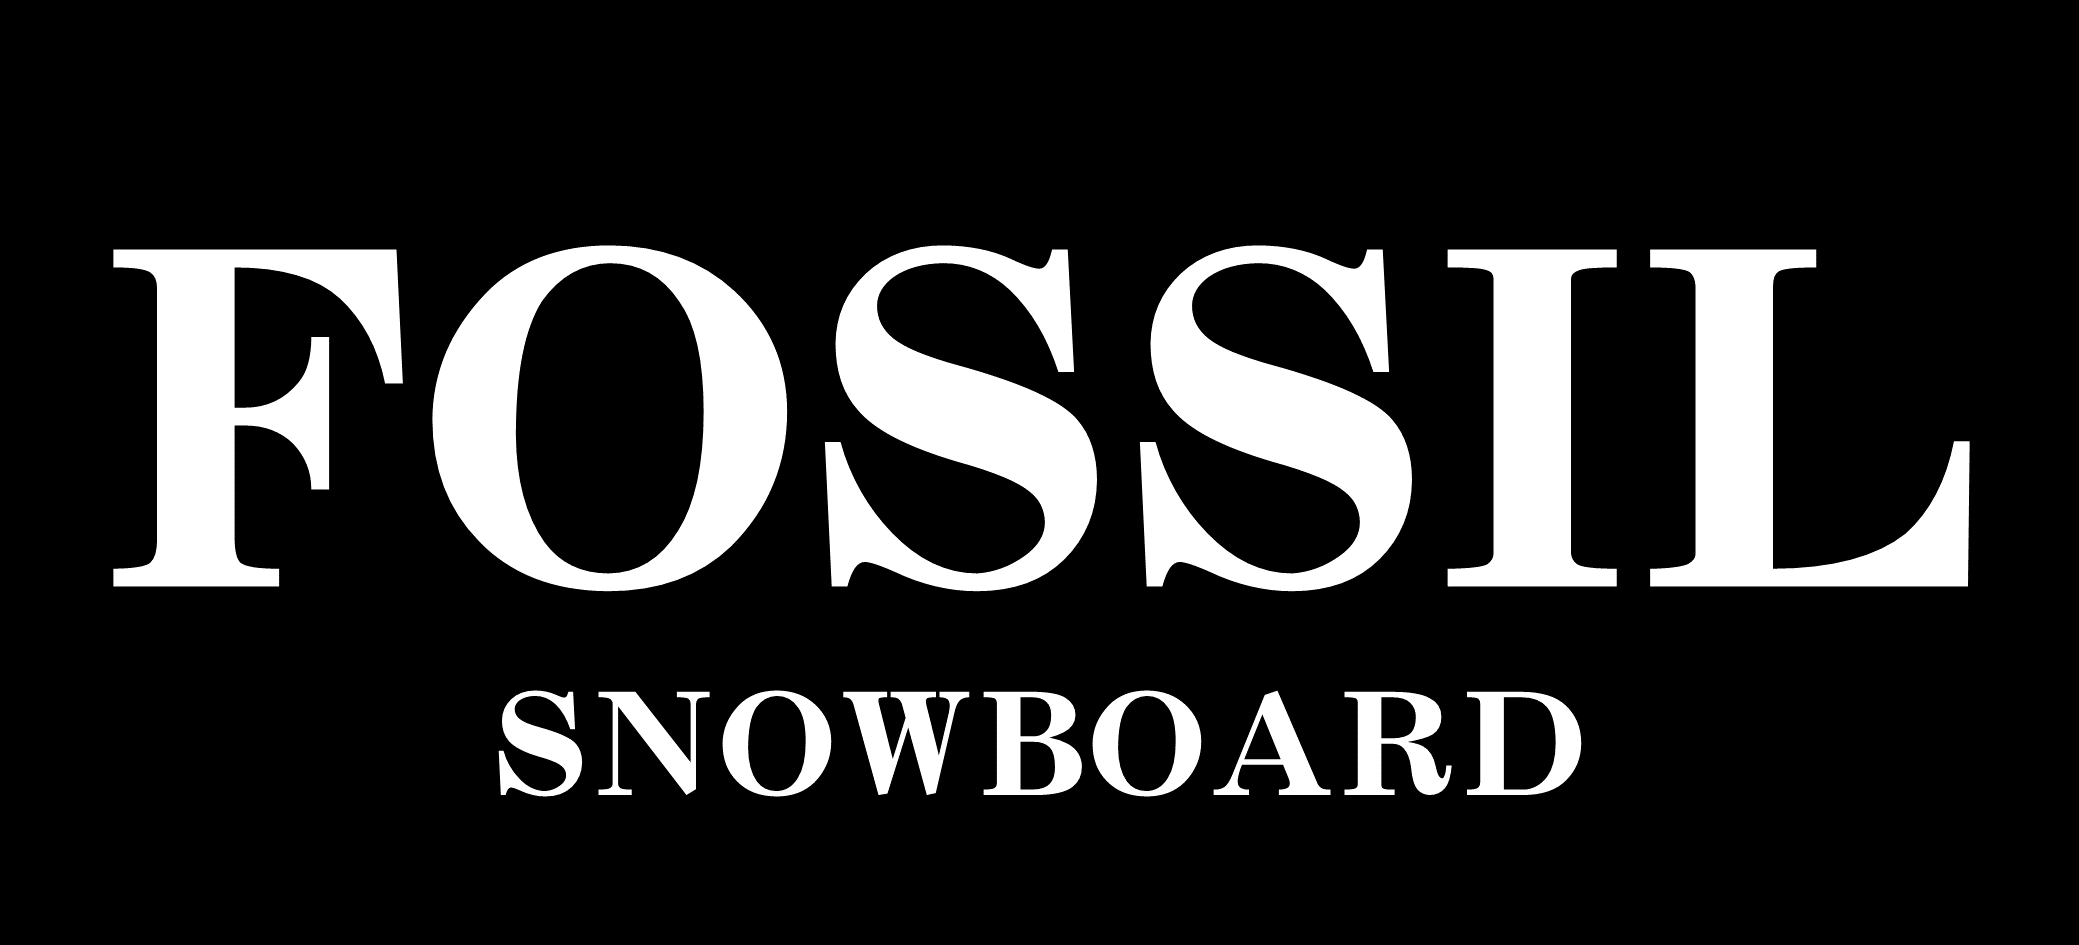 FOSSIL SNOWBOARD